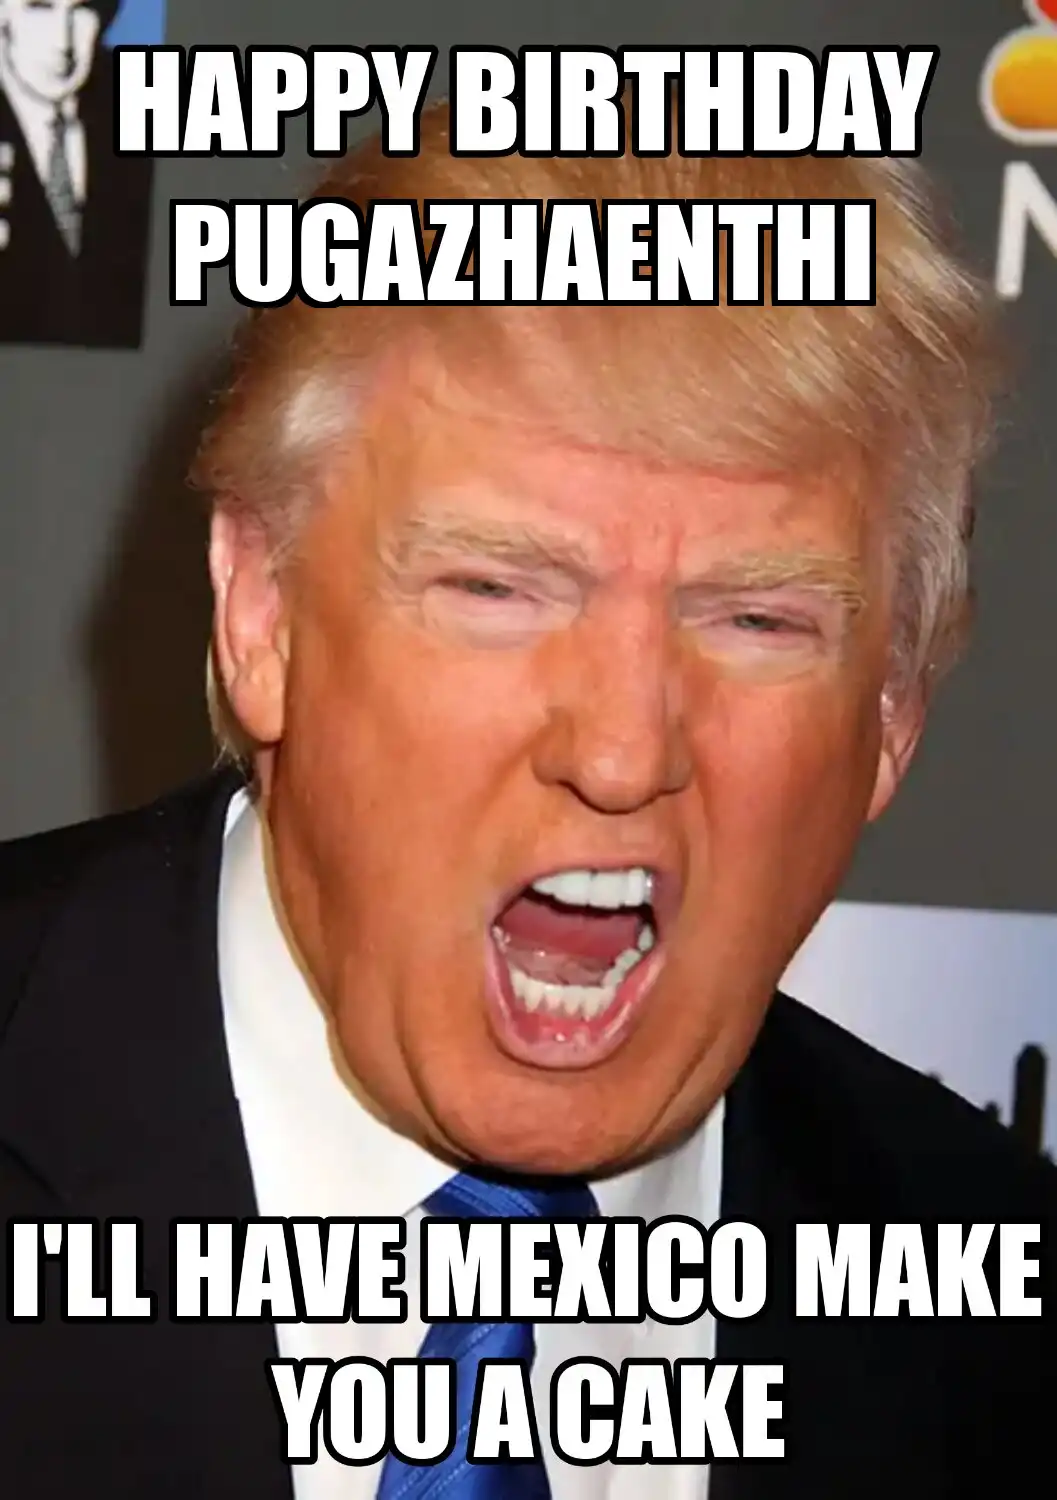 Happy Birthday Pugazhaenthi Mexico Make You A Cake Meme